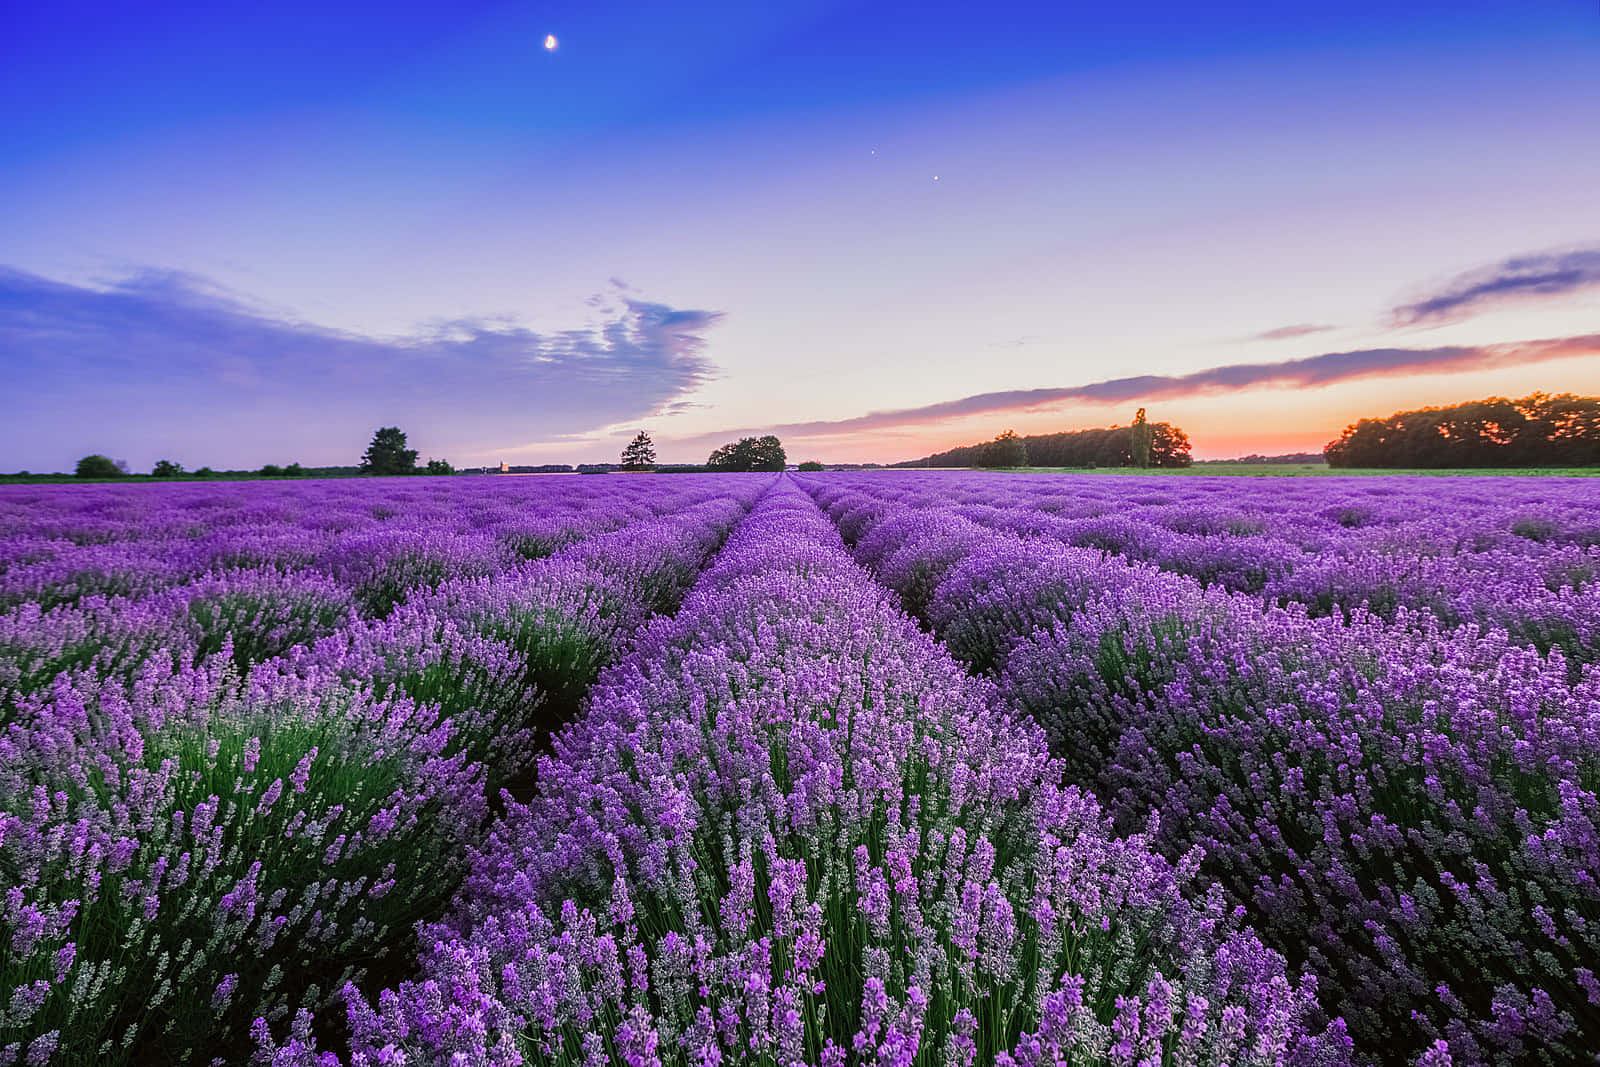 “The breathtaking beauty of a lavender field.”